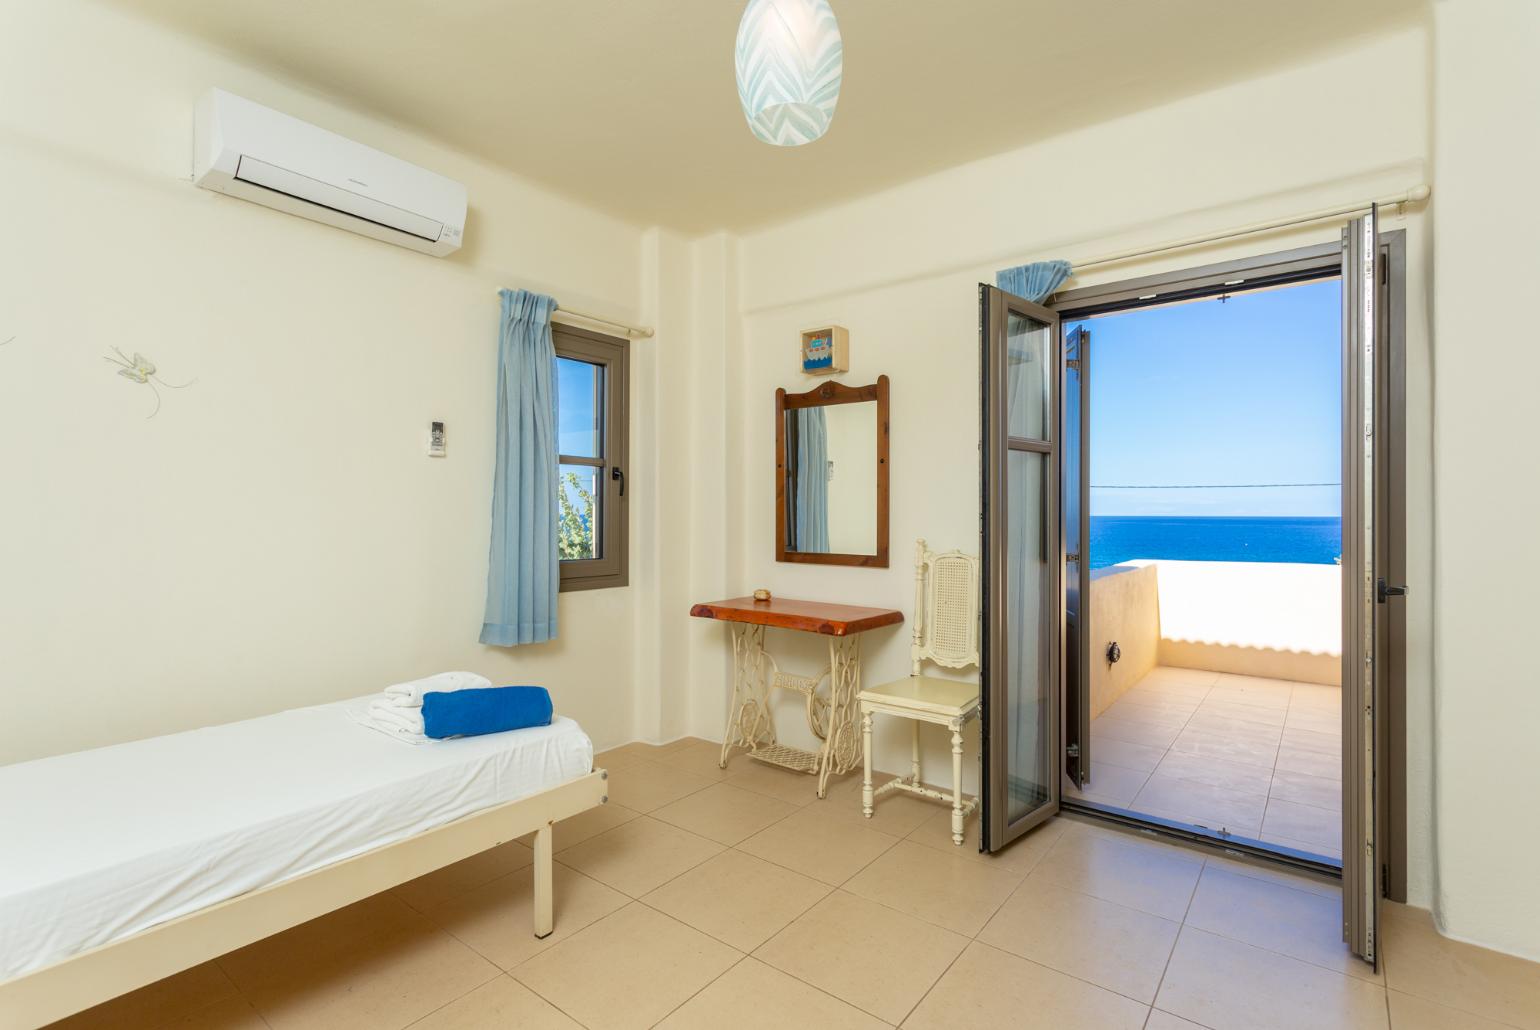 Twin bedroom with en suite bathroom, A/C, and balcony with sea views